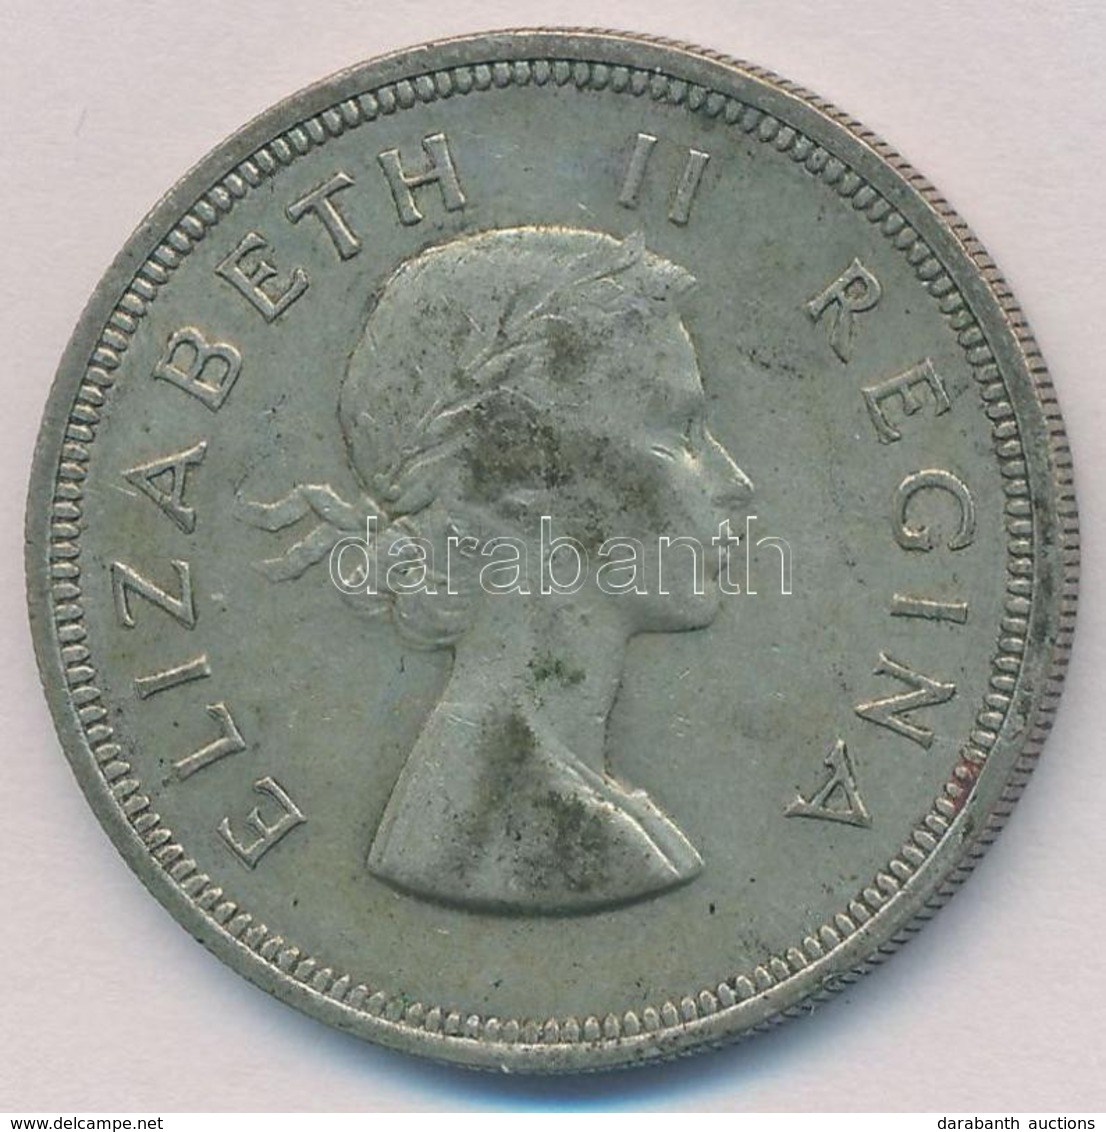 Dél-Afrika 1957. 2 1/2Sh Ag 'II. Erzsébet' T:2 Patina
South Africa 1957. 2 1/2 Shilling Ag 'Elizabeth II' C:XF Patina
Kr - Unclassified